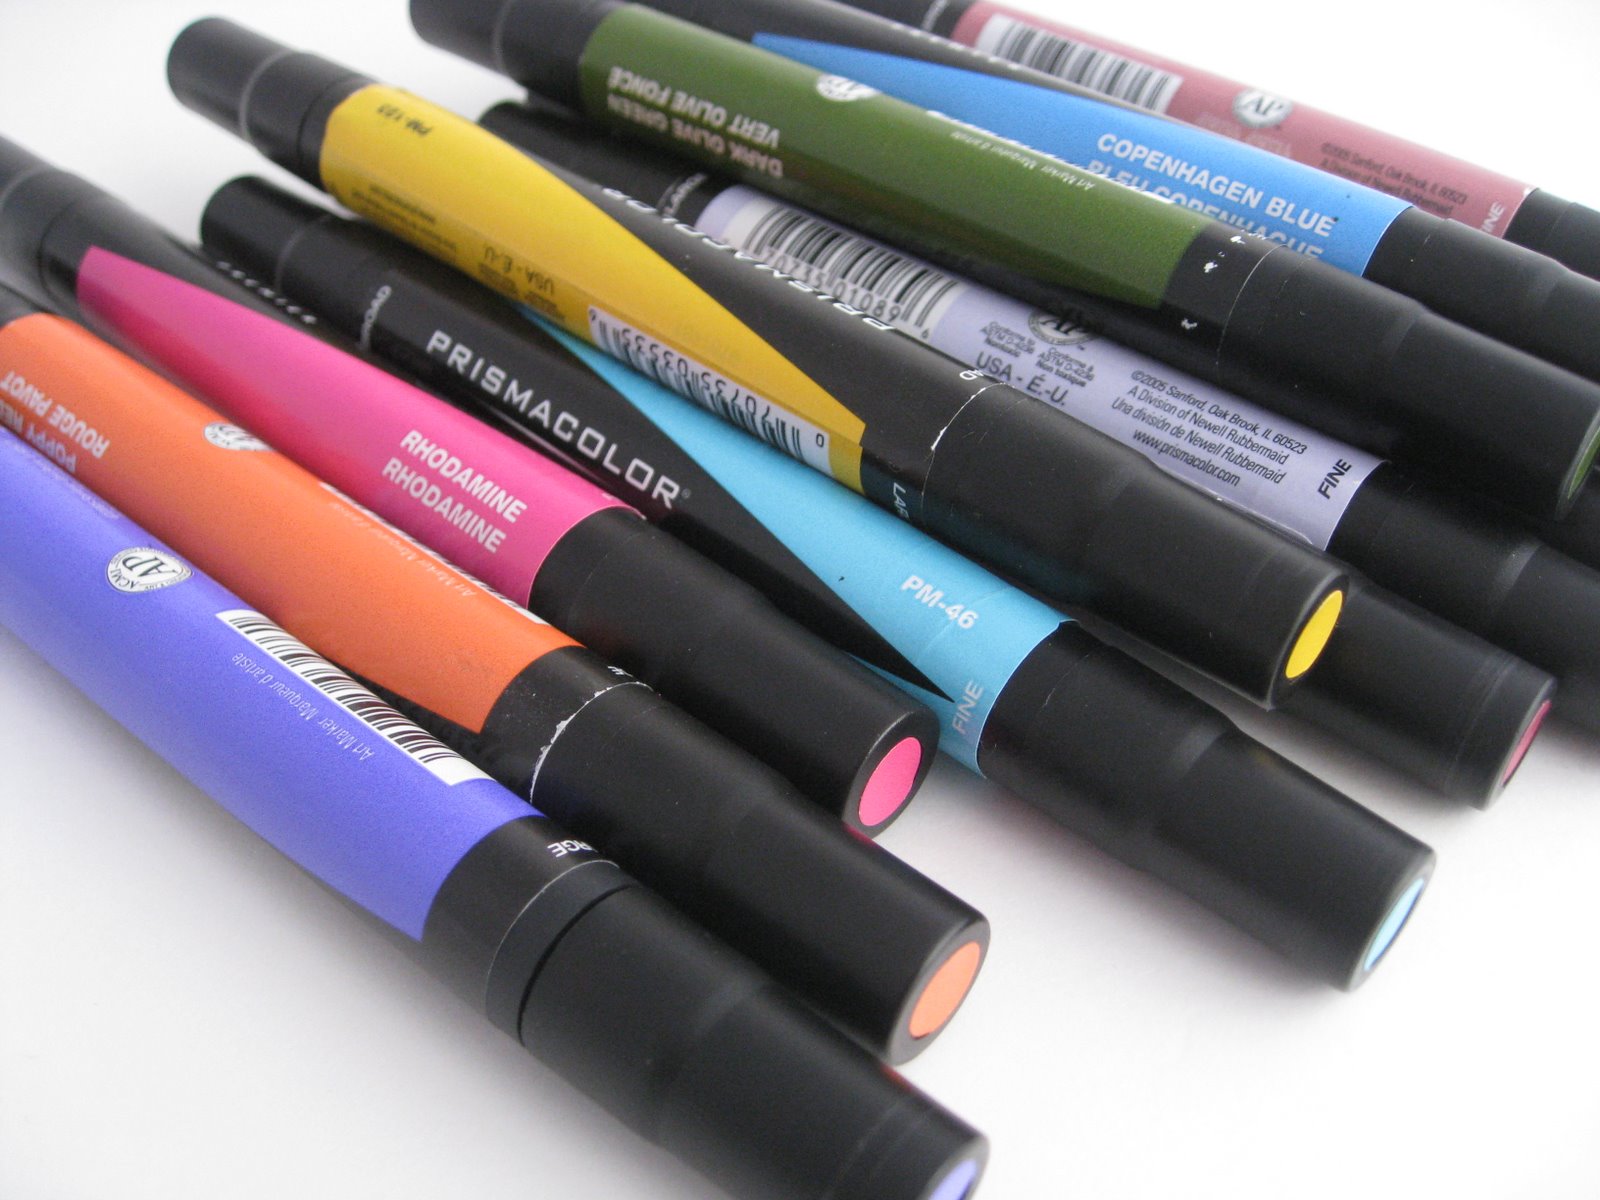 Art markers, prismacolor markers 48 Color Set 